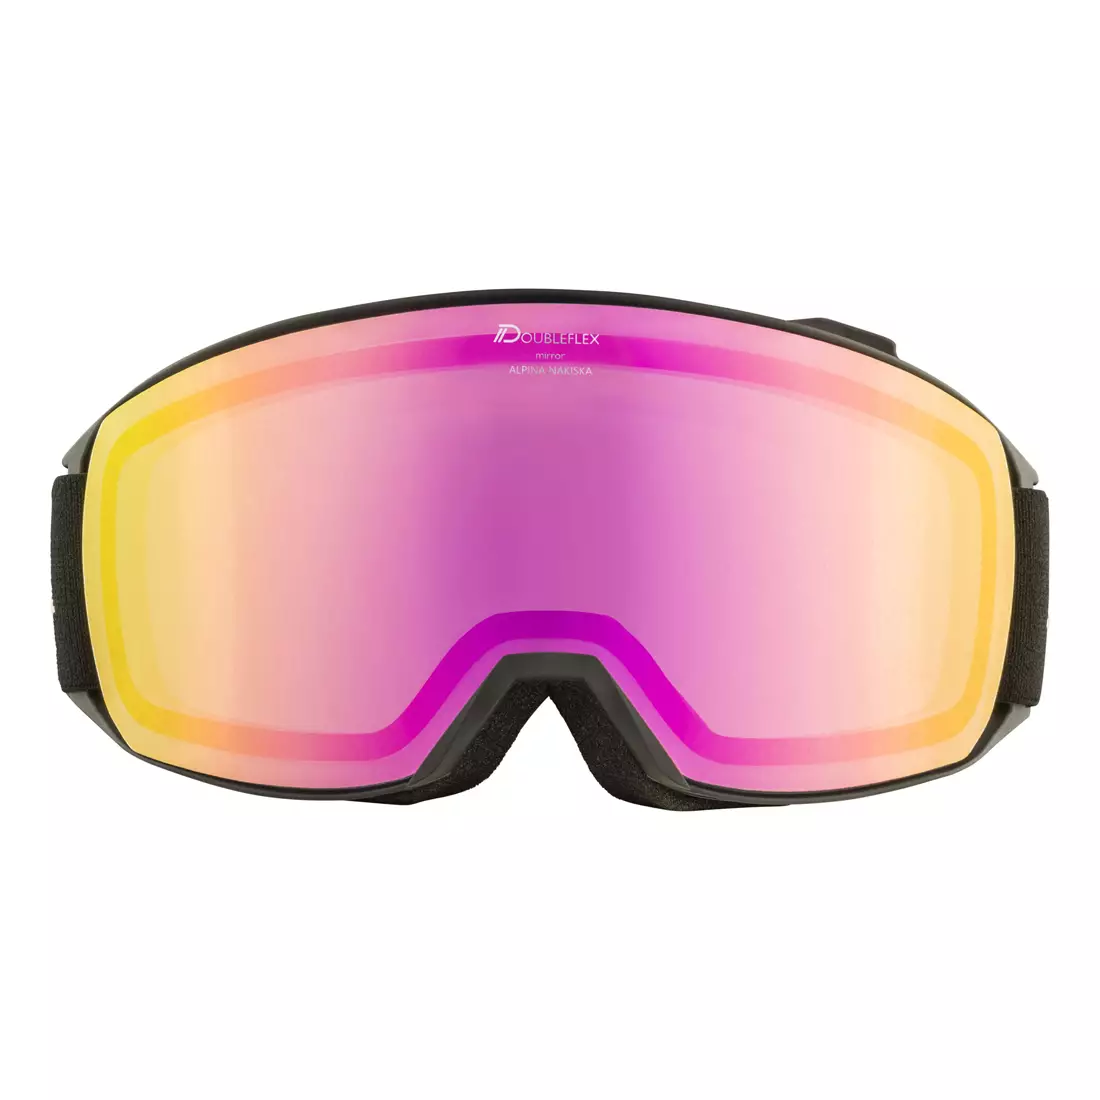 ALPINA M40 NAKISKA Q-LITE lyžiarske/snowboardové okuliare, black-rose matt